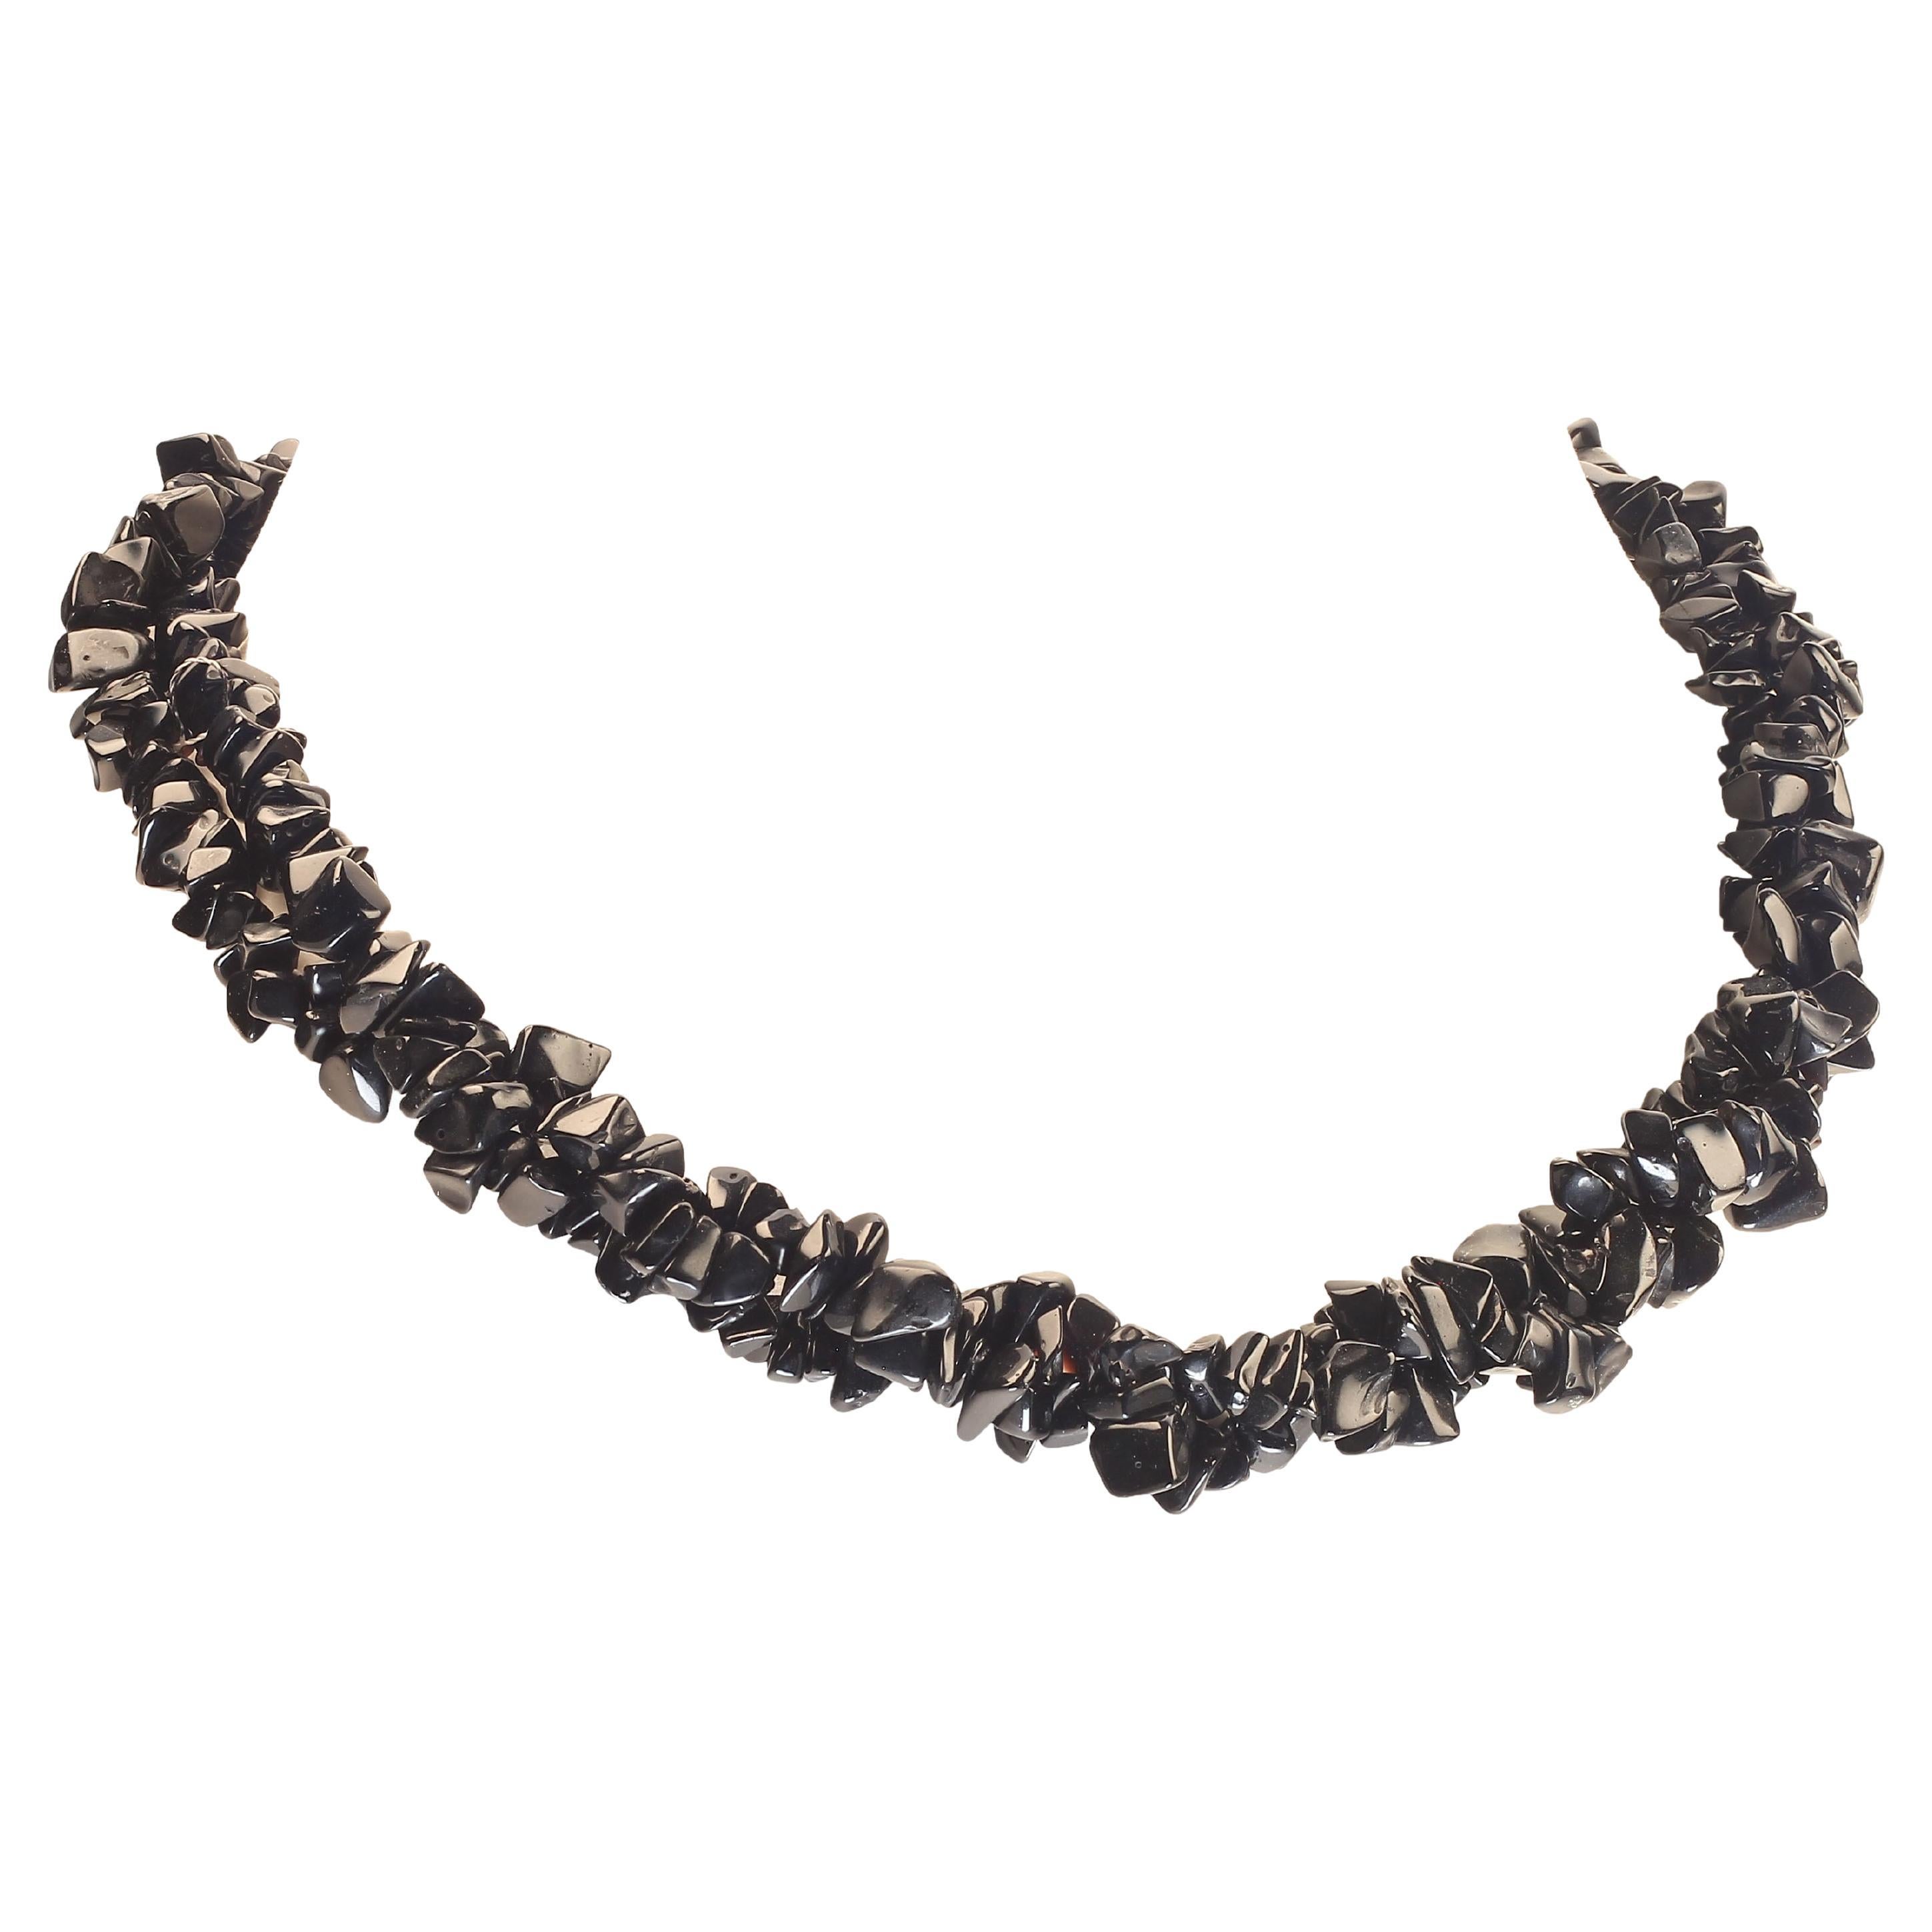 AJD Elegant Black Onyx Chip Necklace  Great Gift!!